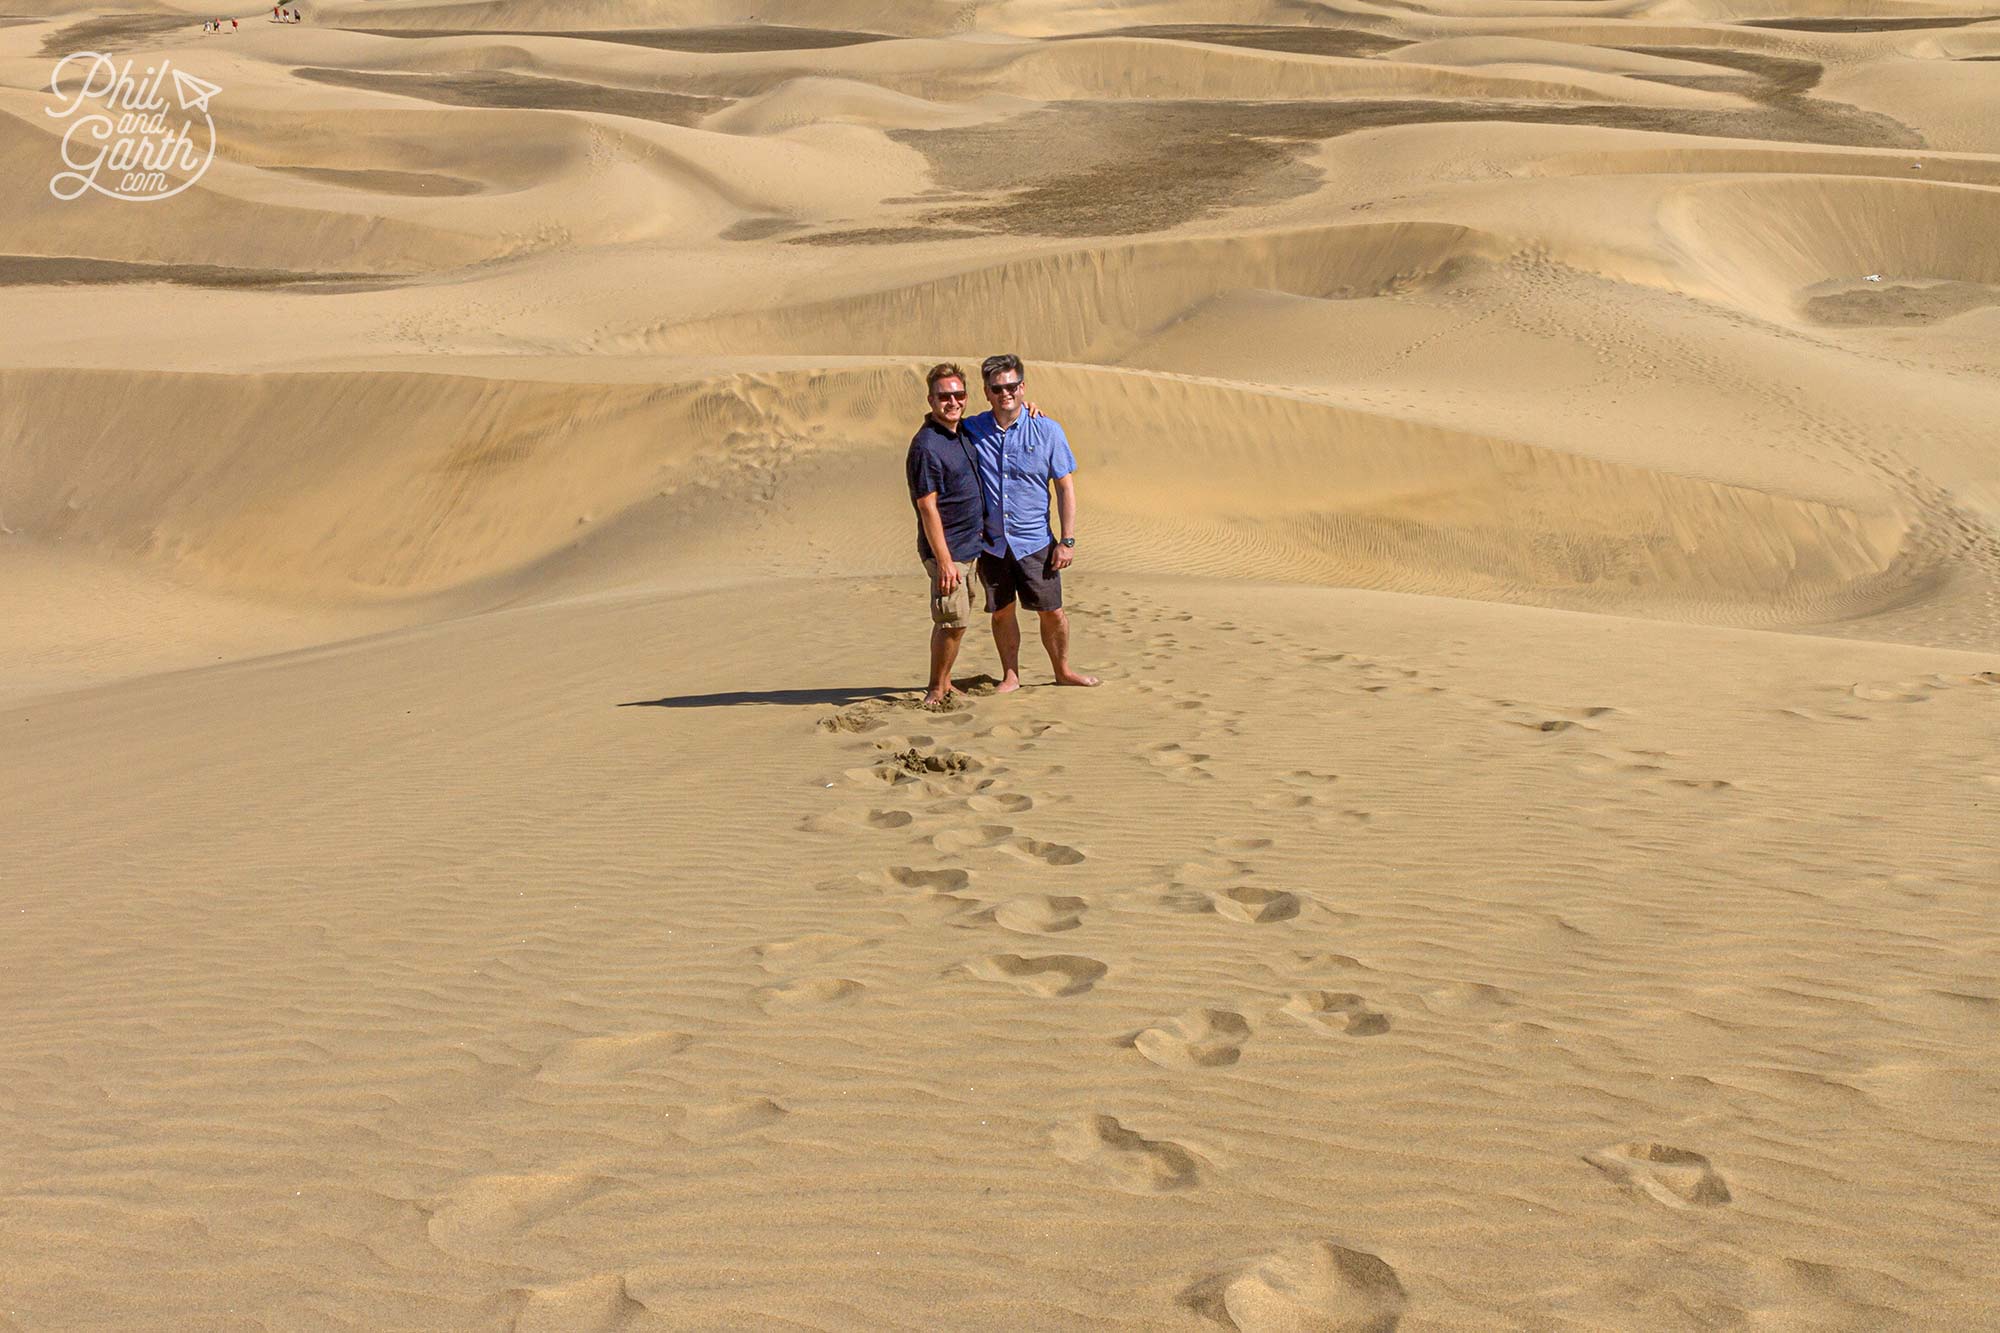 Garth & Phil at the Maspalomas sand dunes